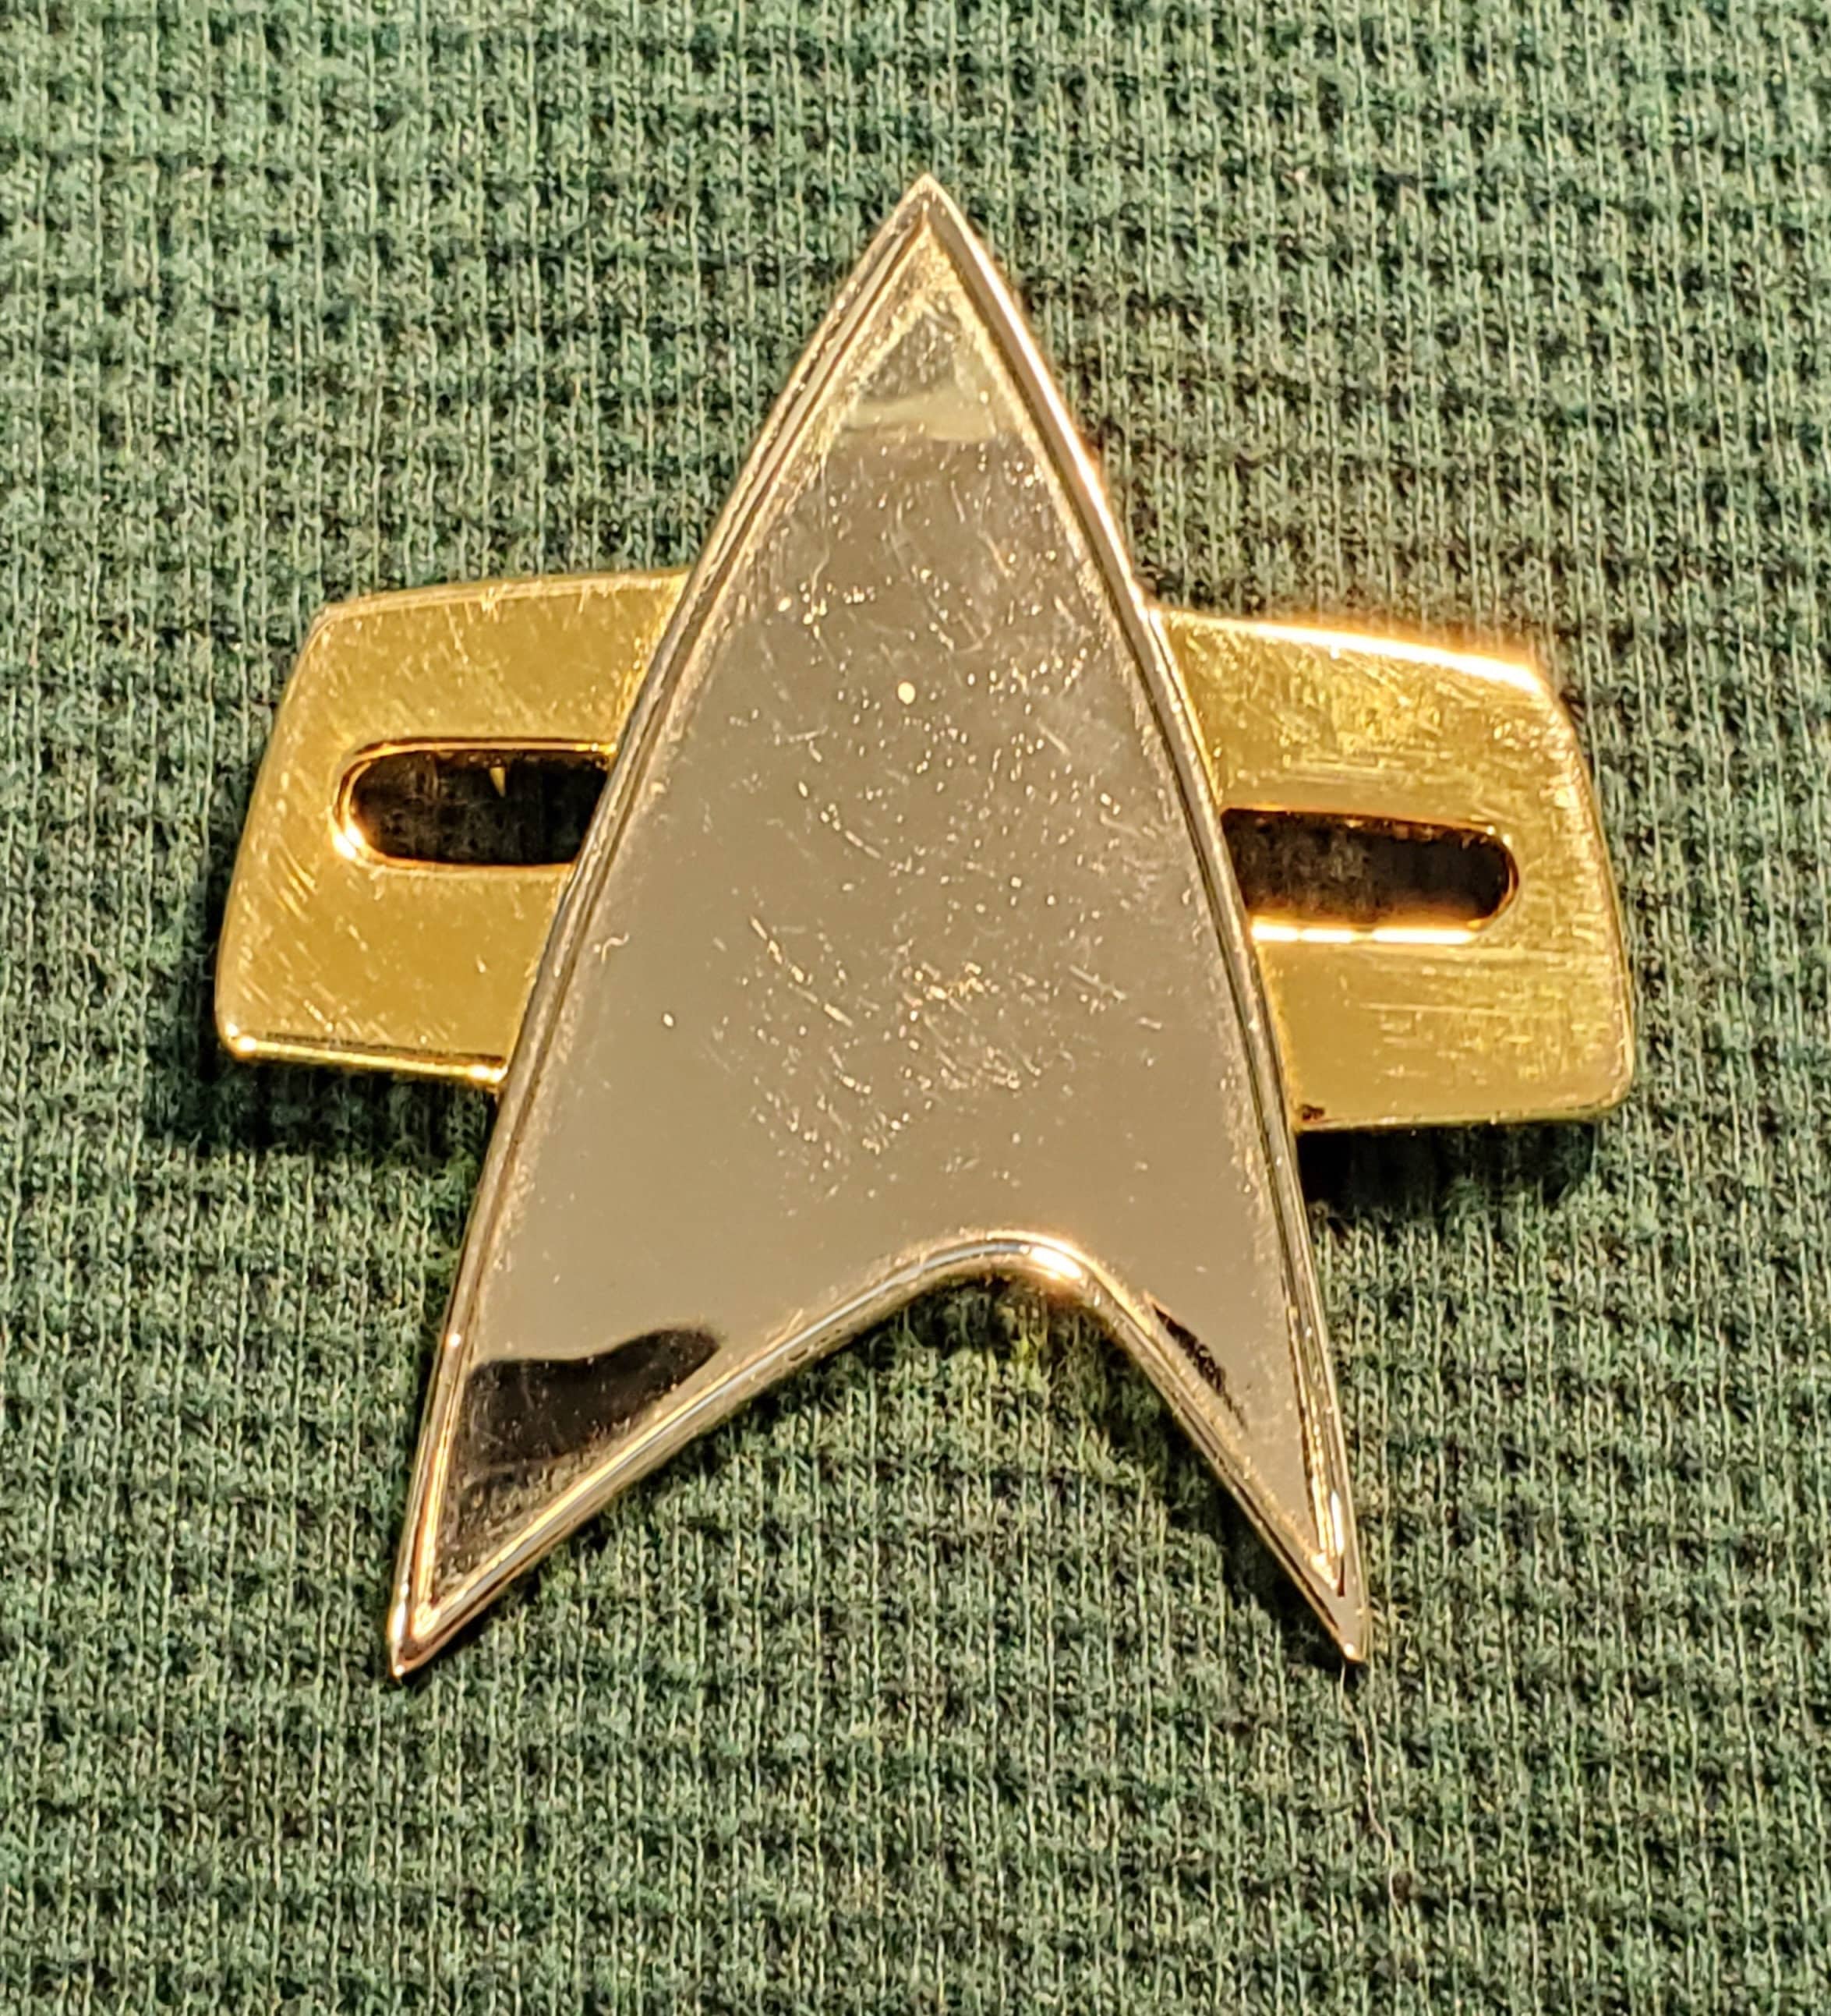 Vintage STAR TREK Voyager Communicator Badge by Paramount Etsy